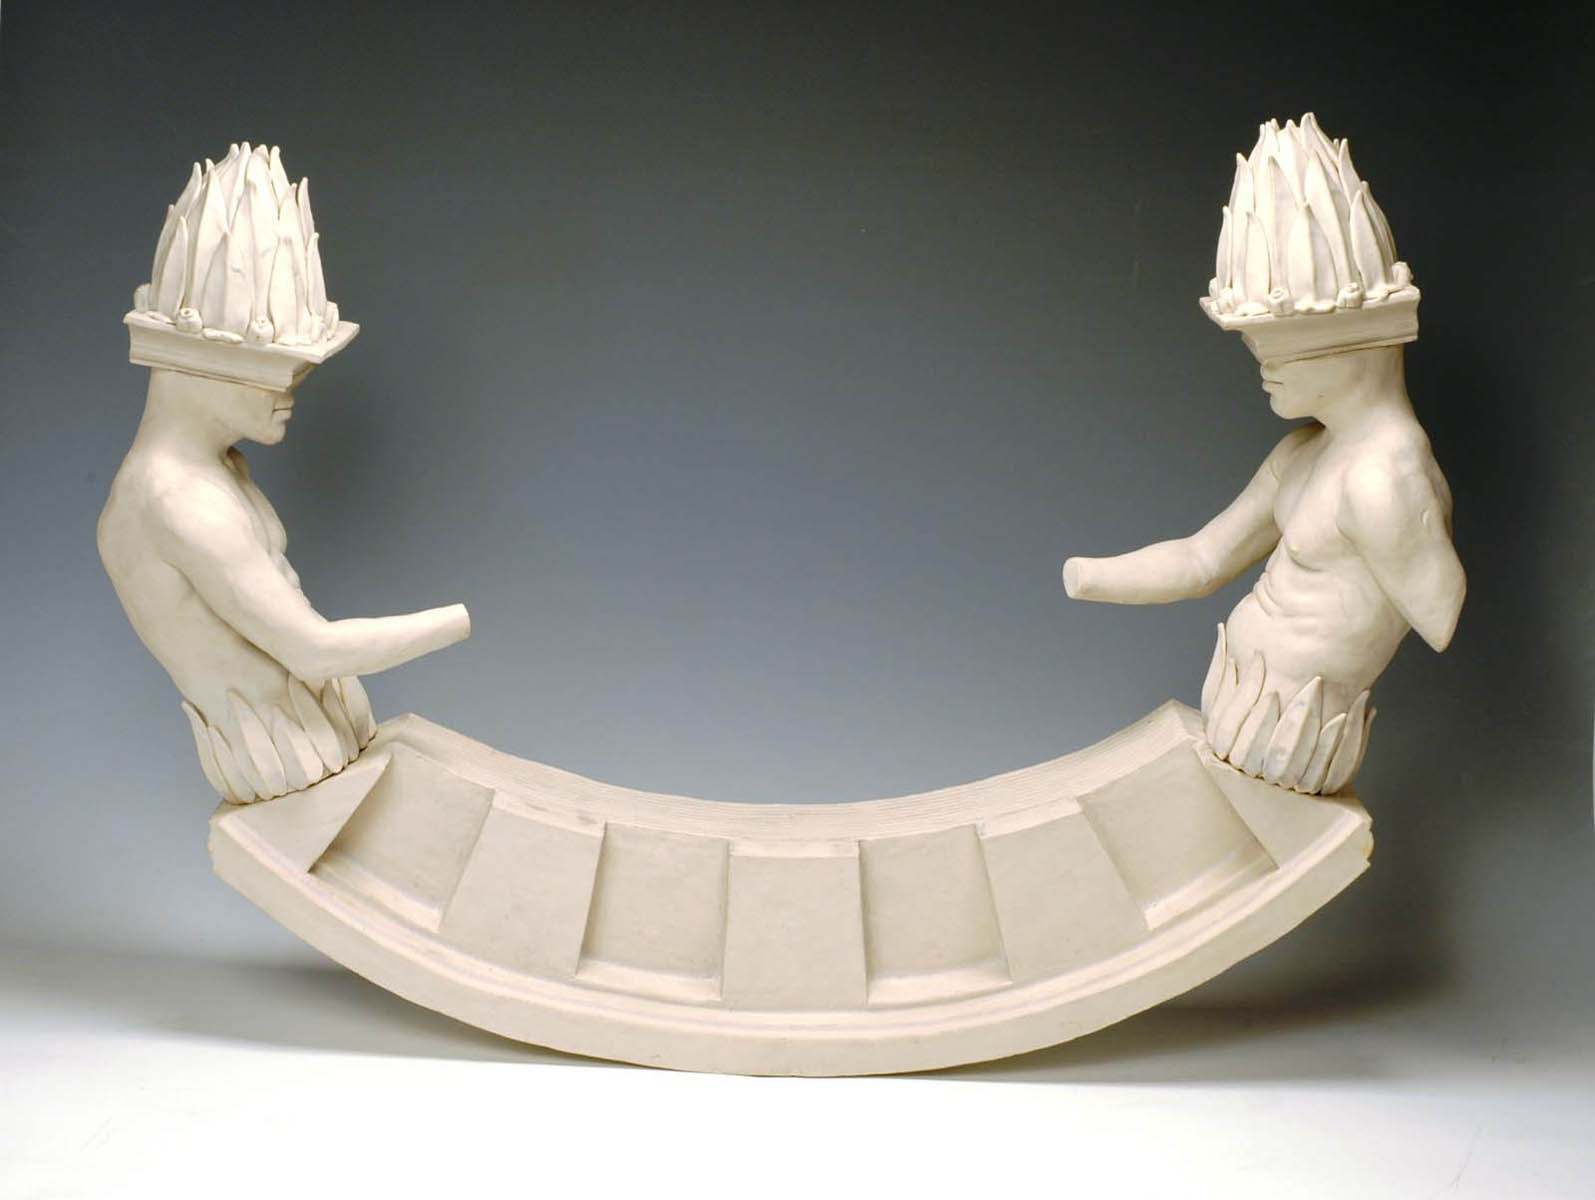 Equilibrium Arizona State Museum Figurative Architectural Ceramics Clay Sculpture by artist Dirk Staschke